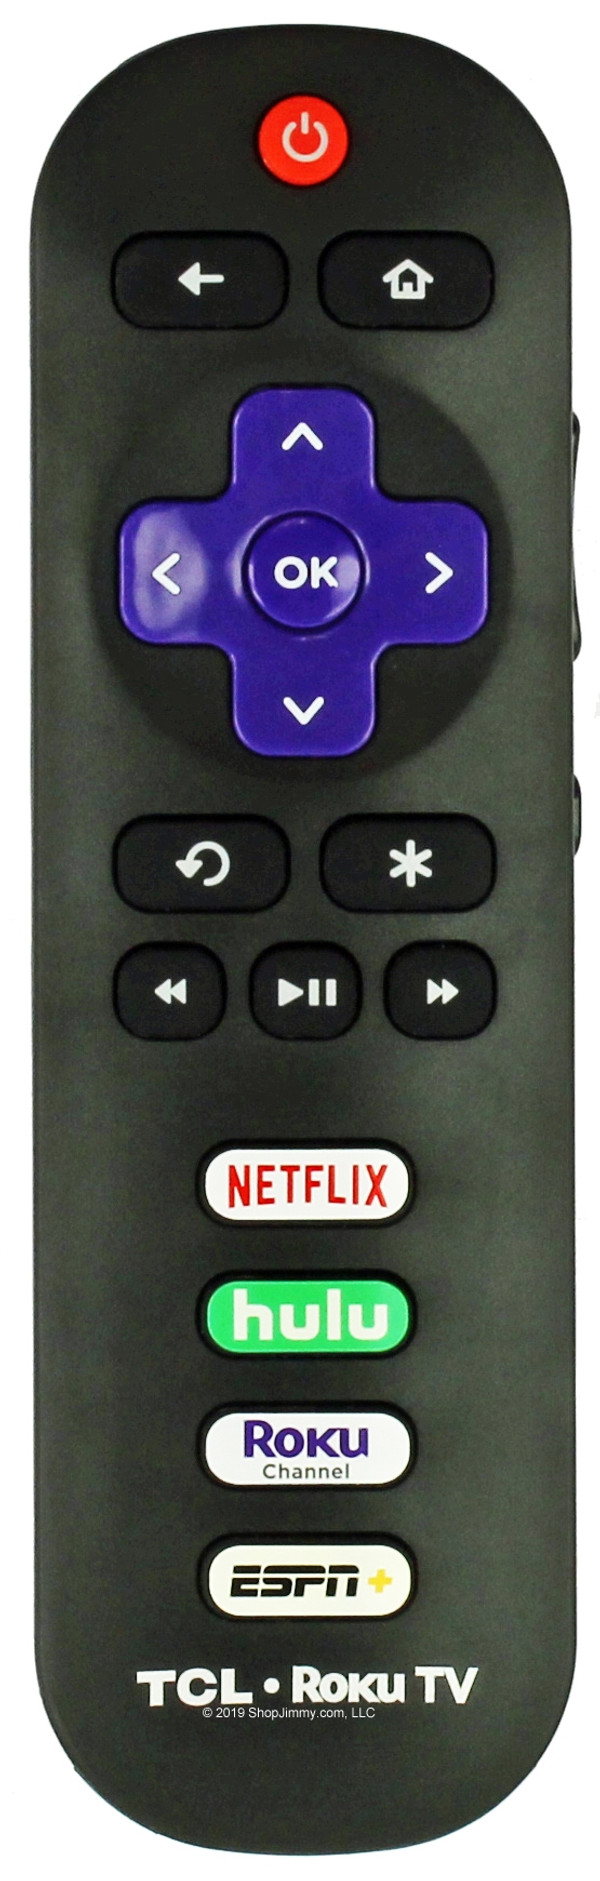 TCL 06-IRPT20-MRC280J Roku Remote Control w/ Netflix hulu ESPN+--Open Bag